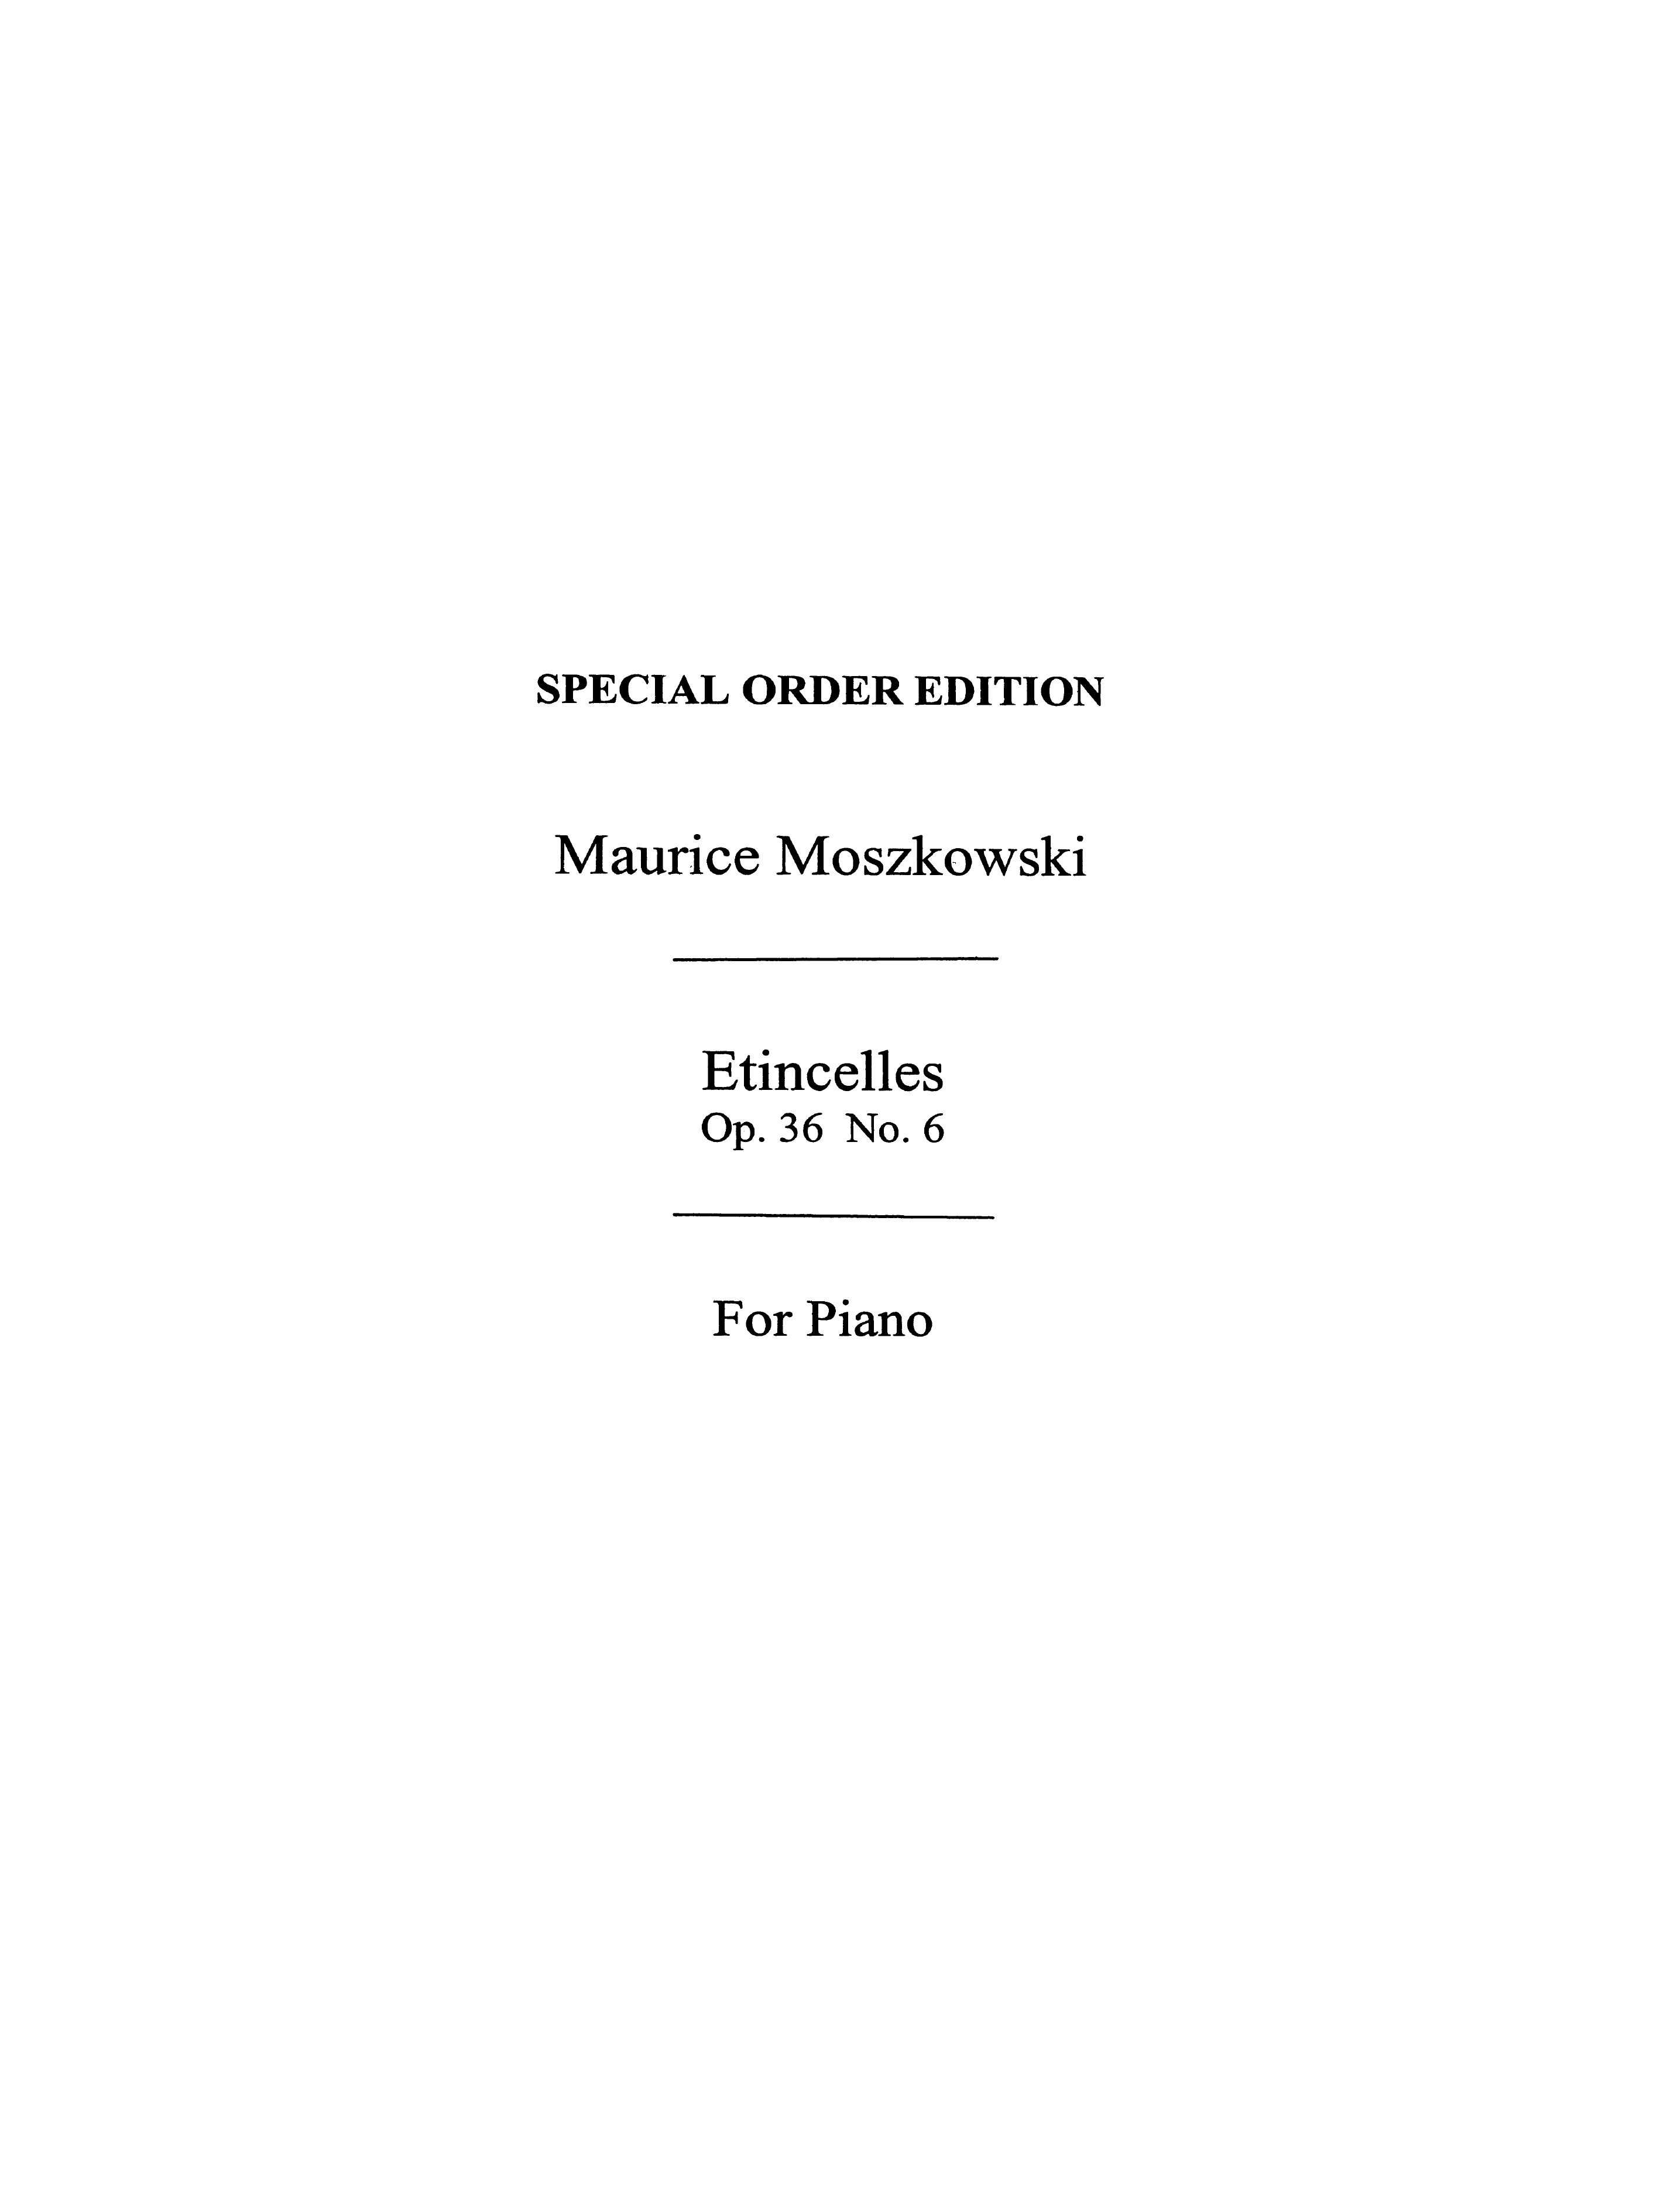 Moszkowski, M Etincelles Op.36/6 Pf